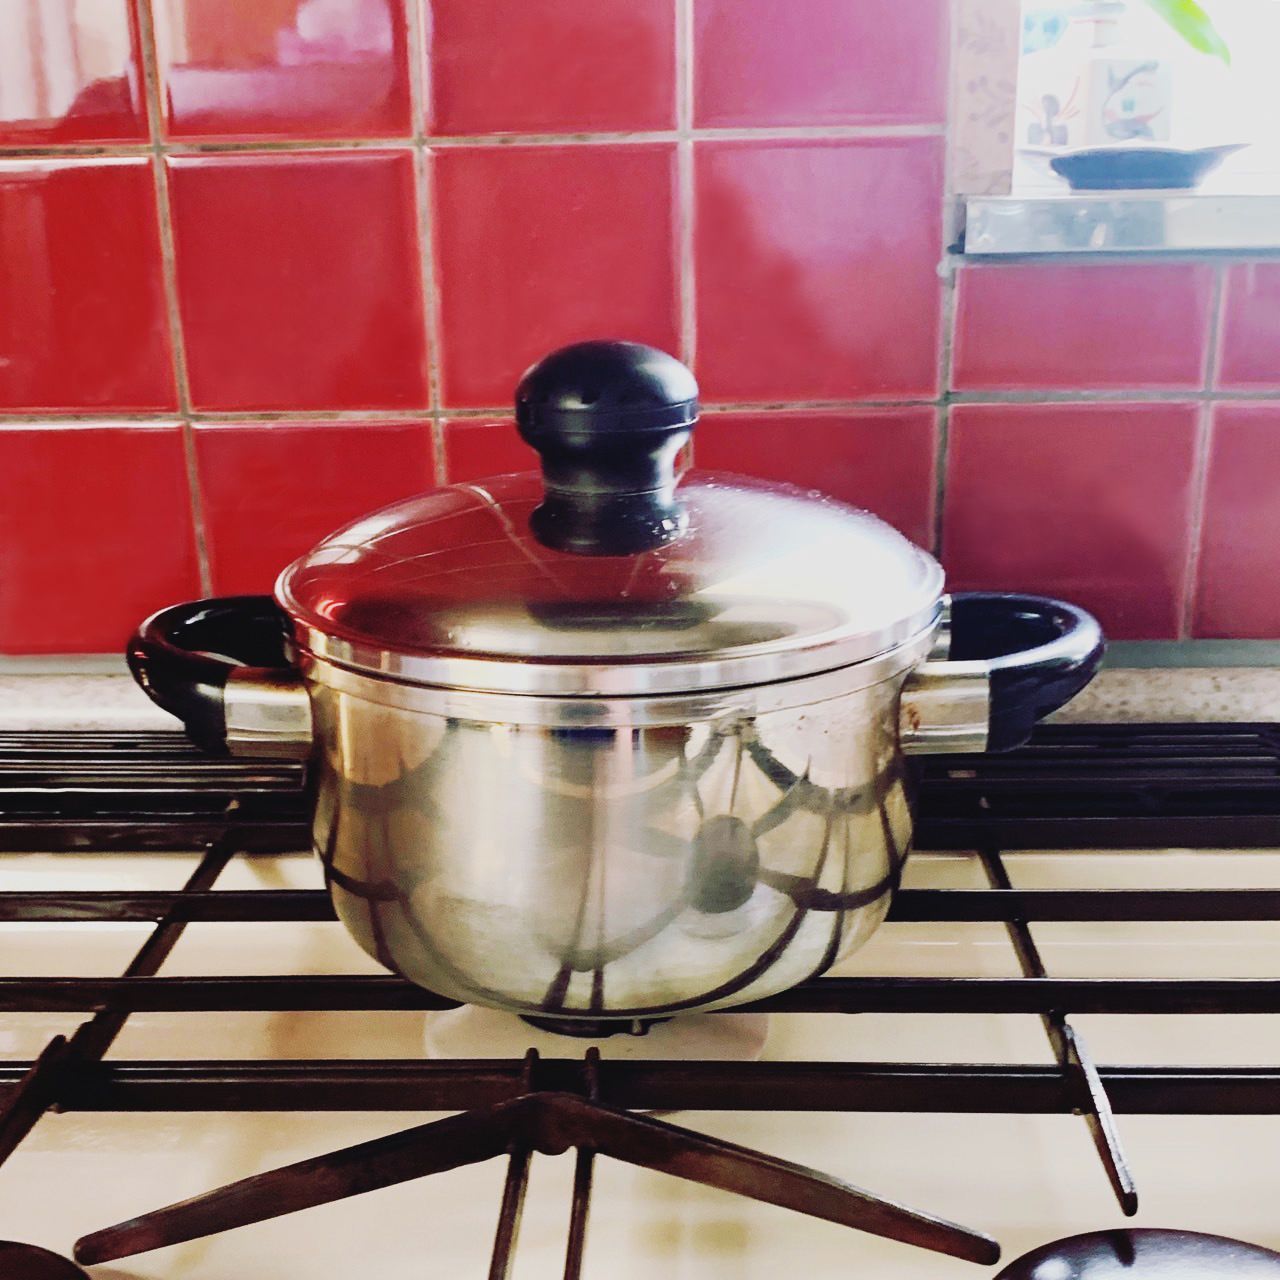 EPISODE | ひとつの鍋が紡ぐ家族の歴史